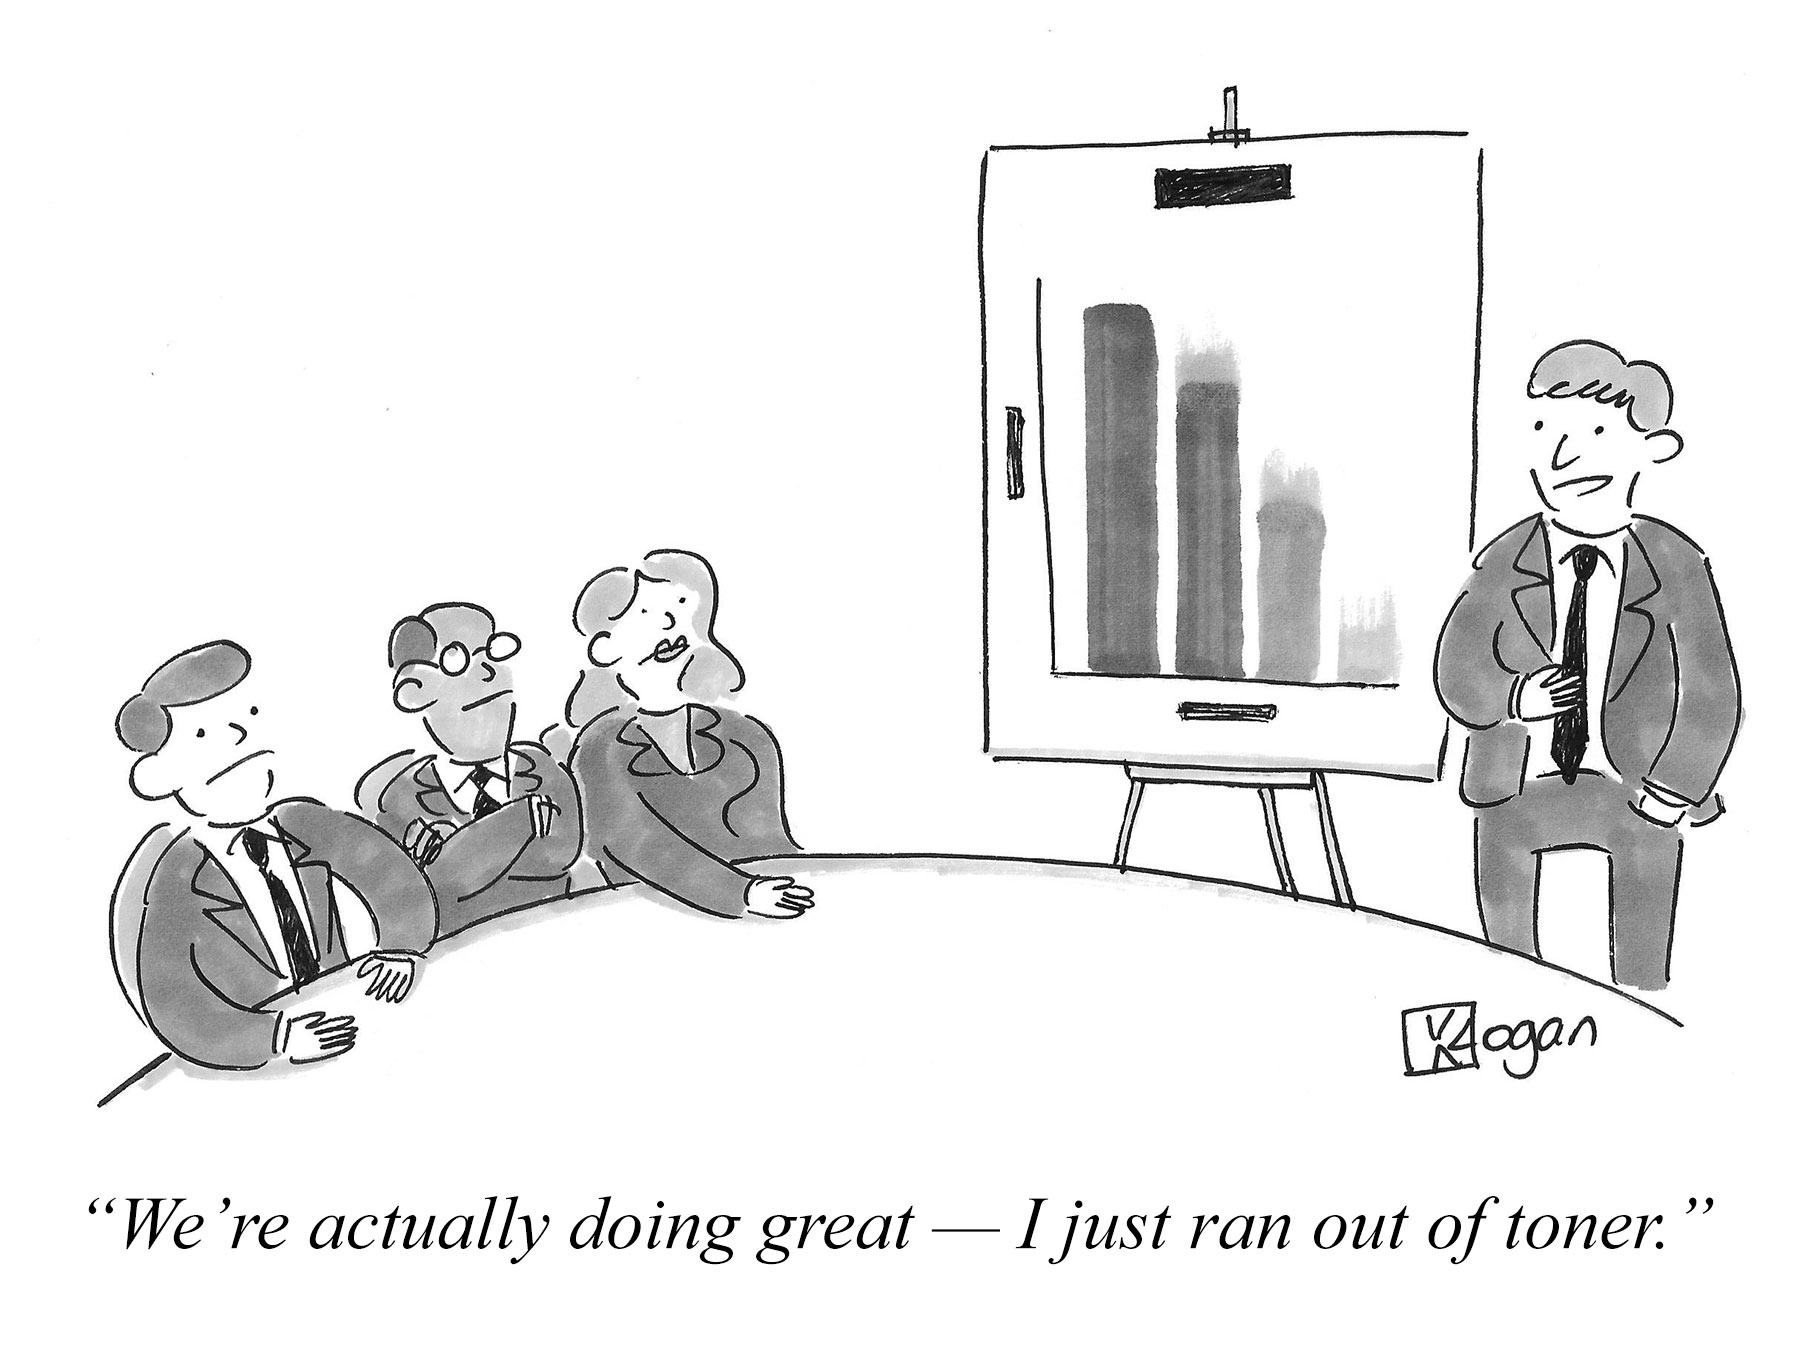 Cartoon about progress towards company goals.